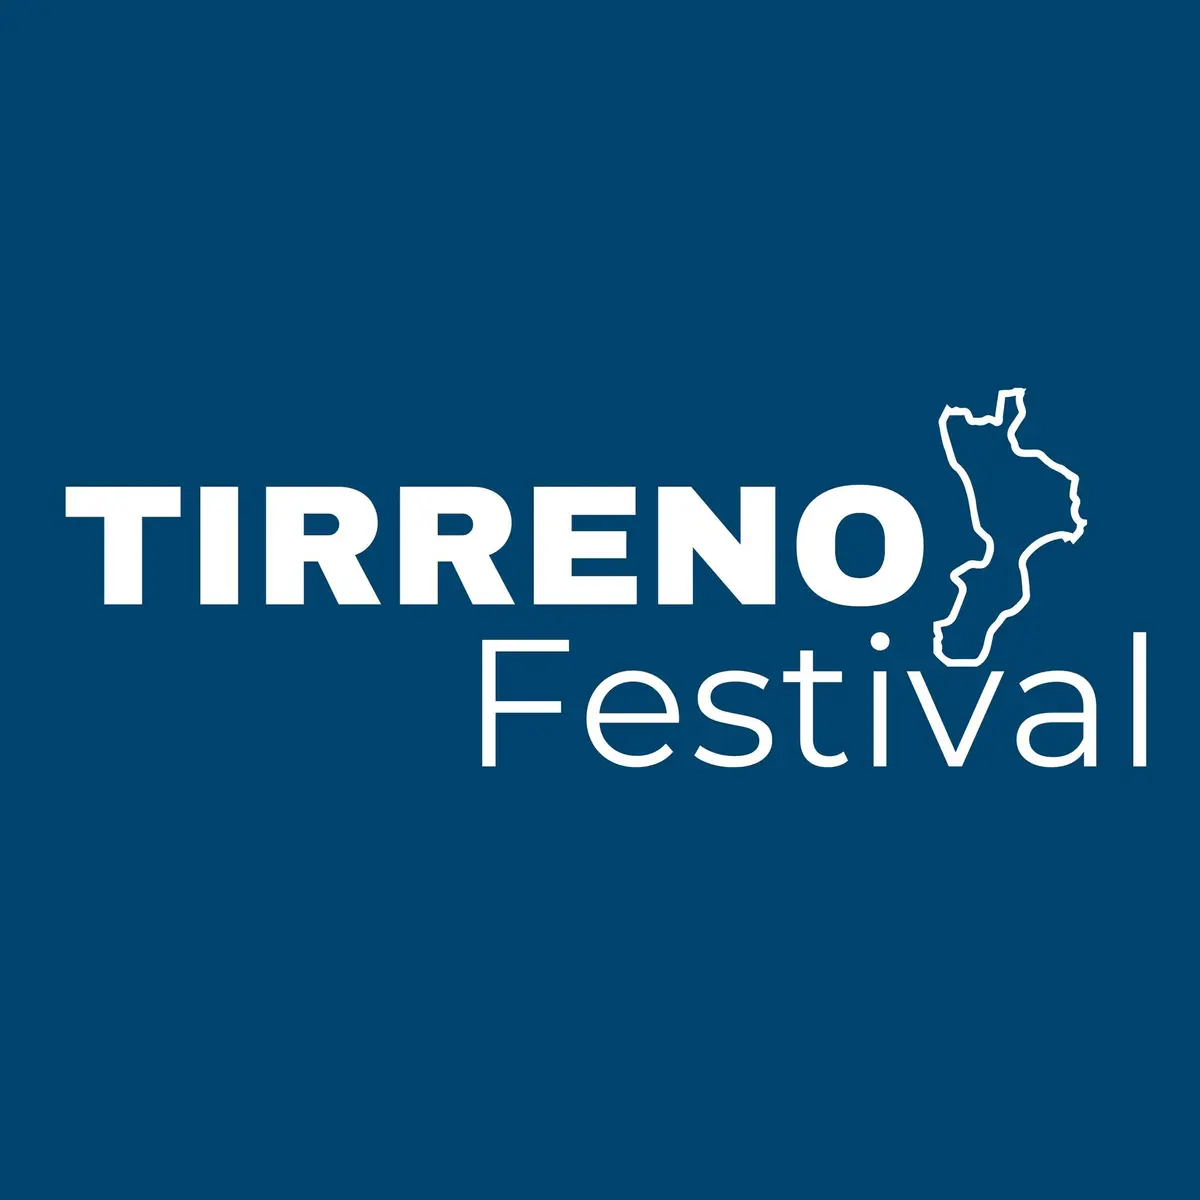 Tirreno Festival